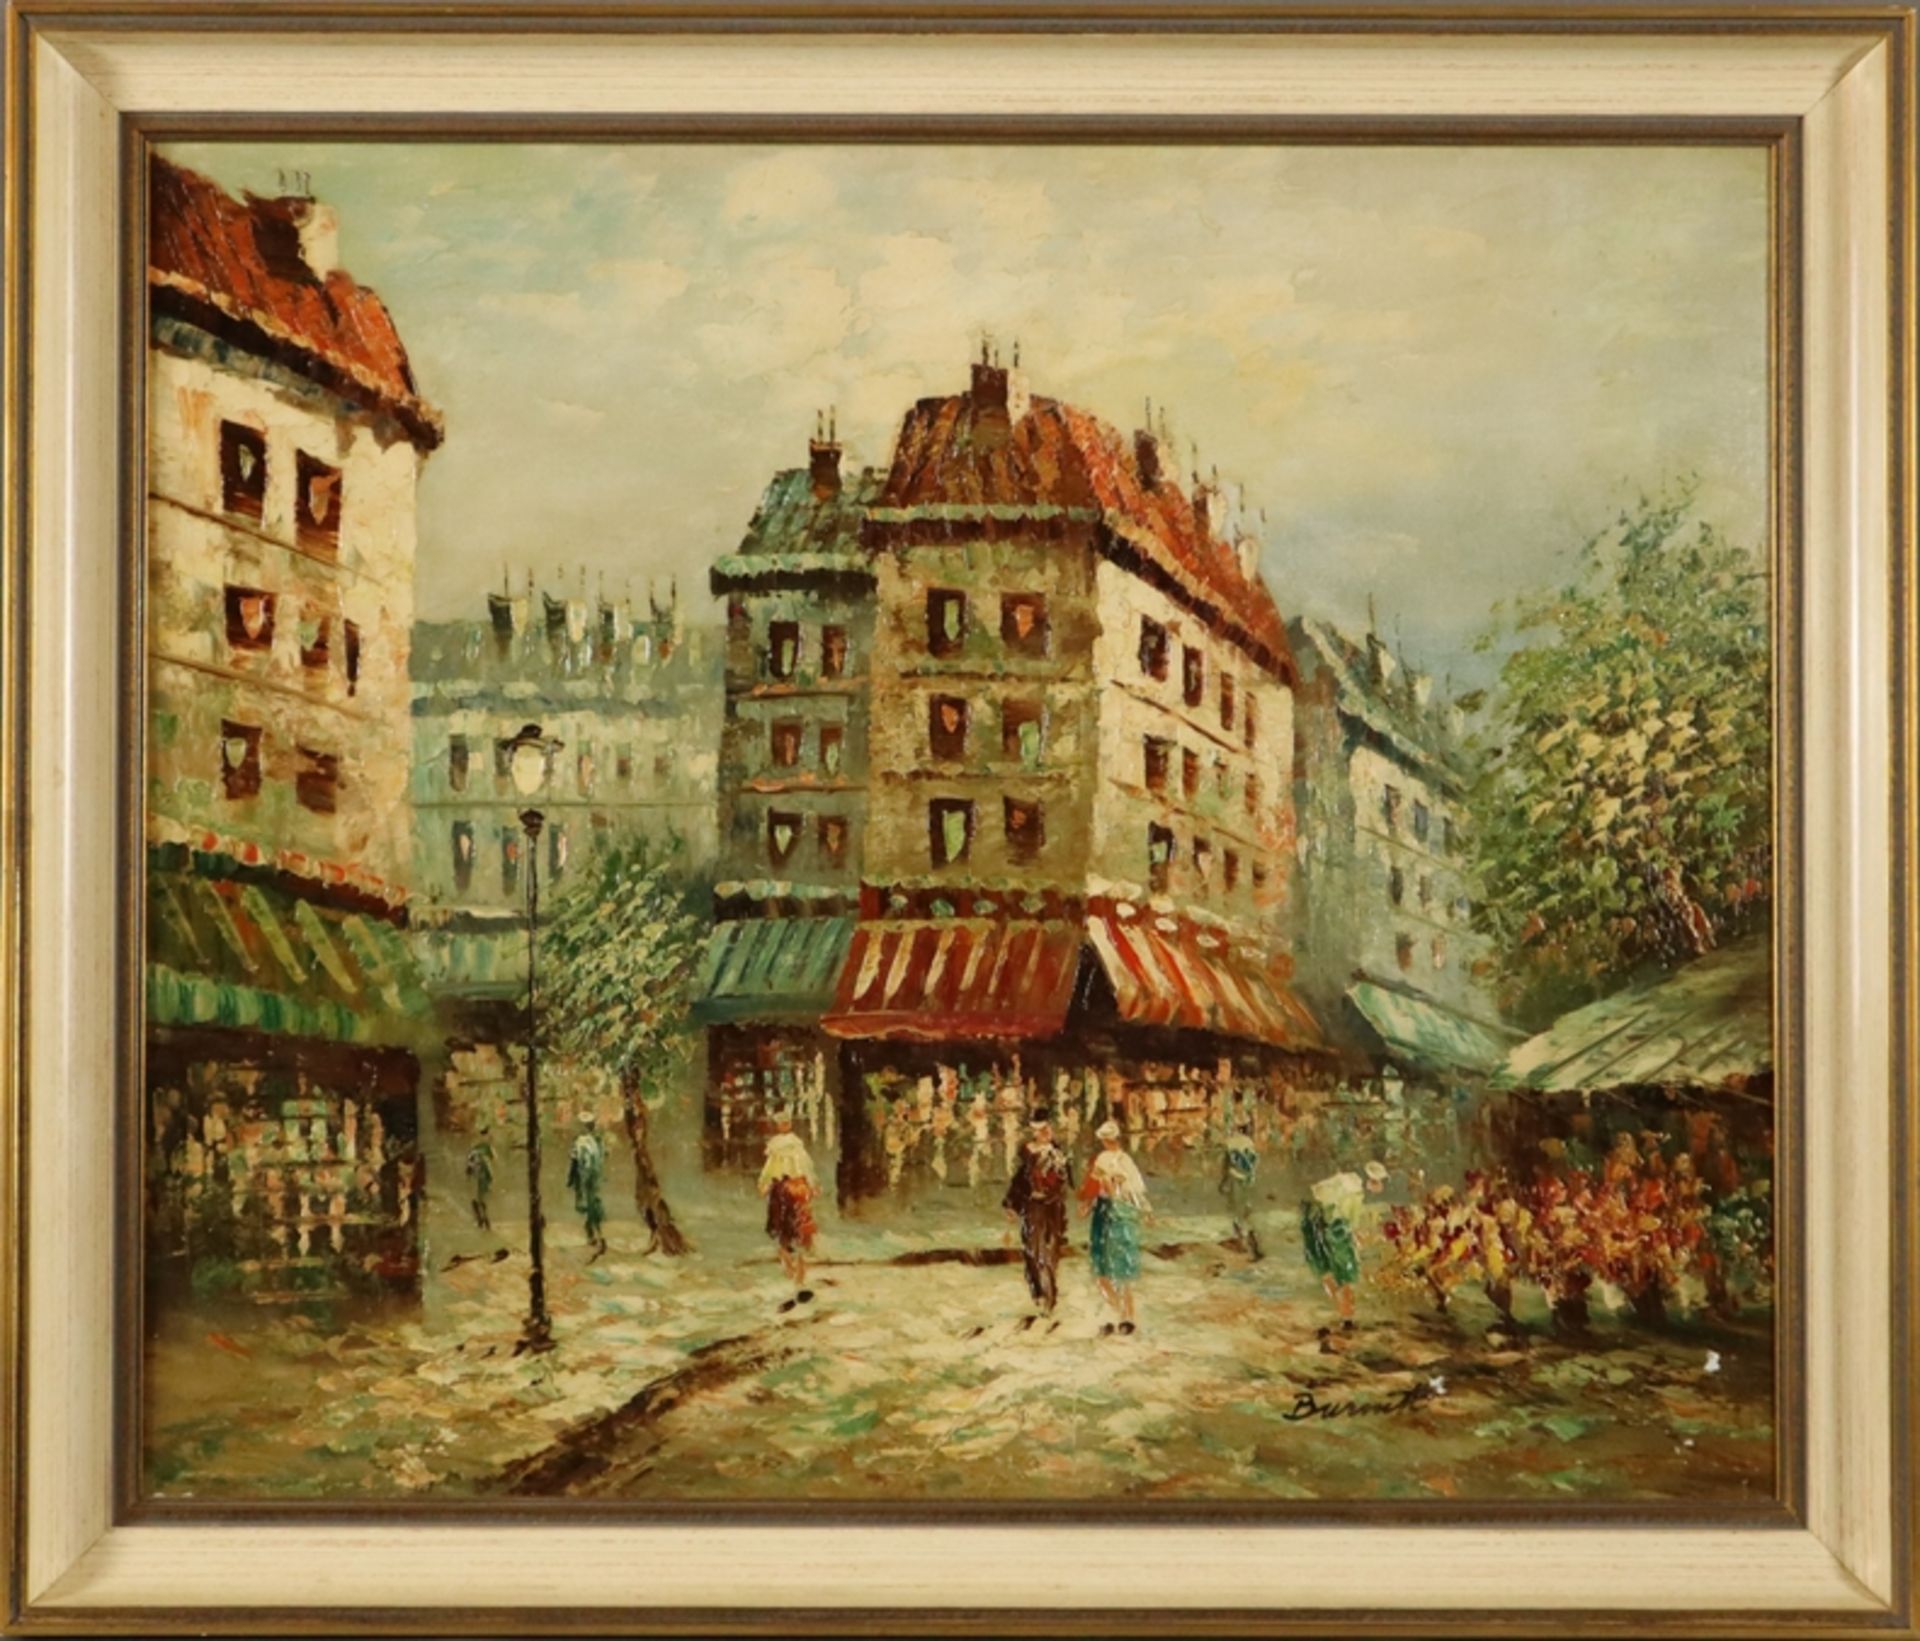 Burnett, Louis Anthony (1907 - 1999 / amerikanischer Maler) - Belebte Pariser Straßenszene, Öl auf